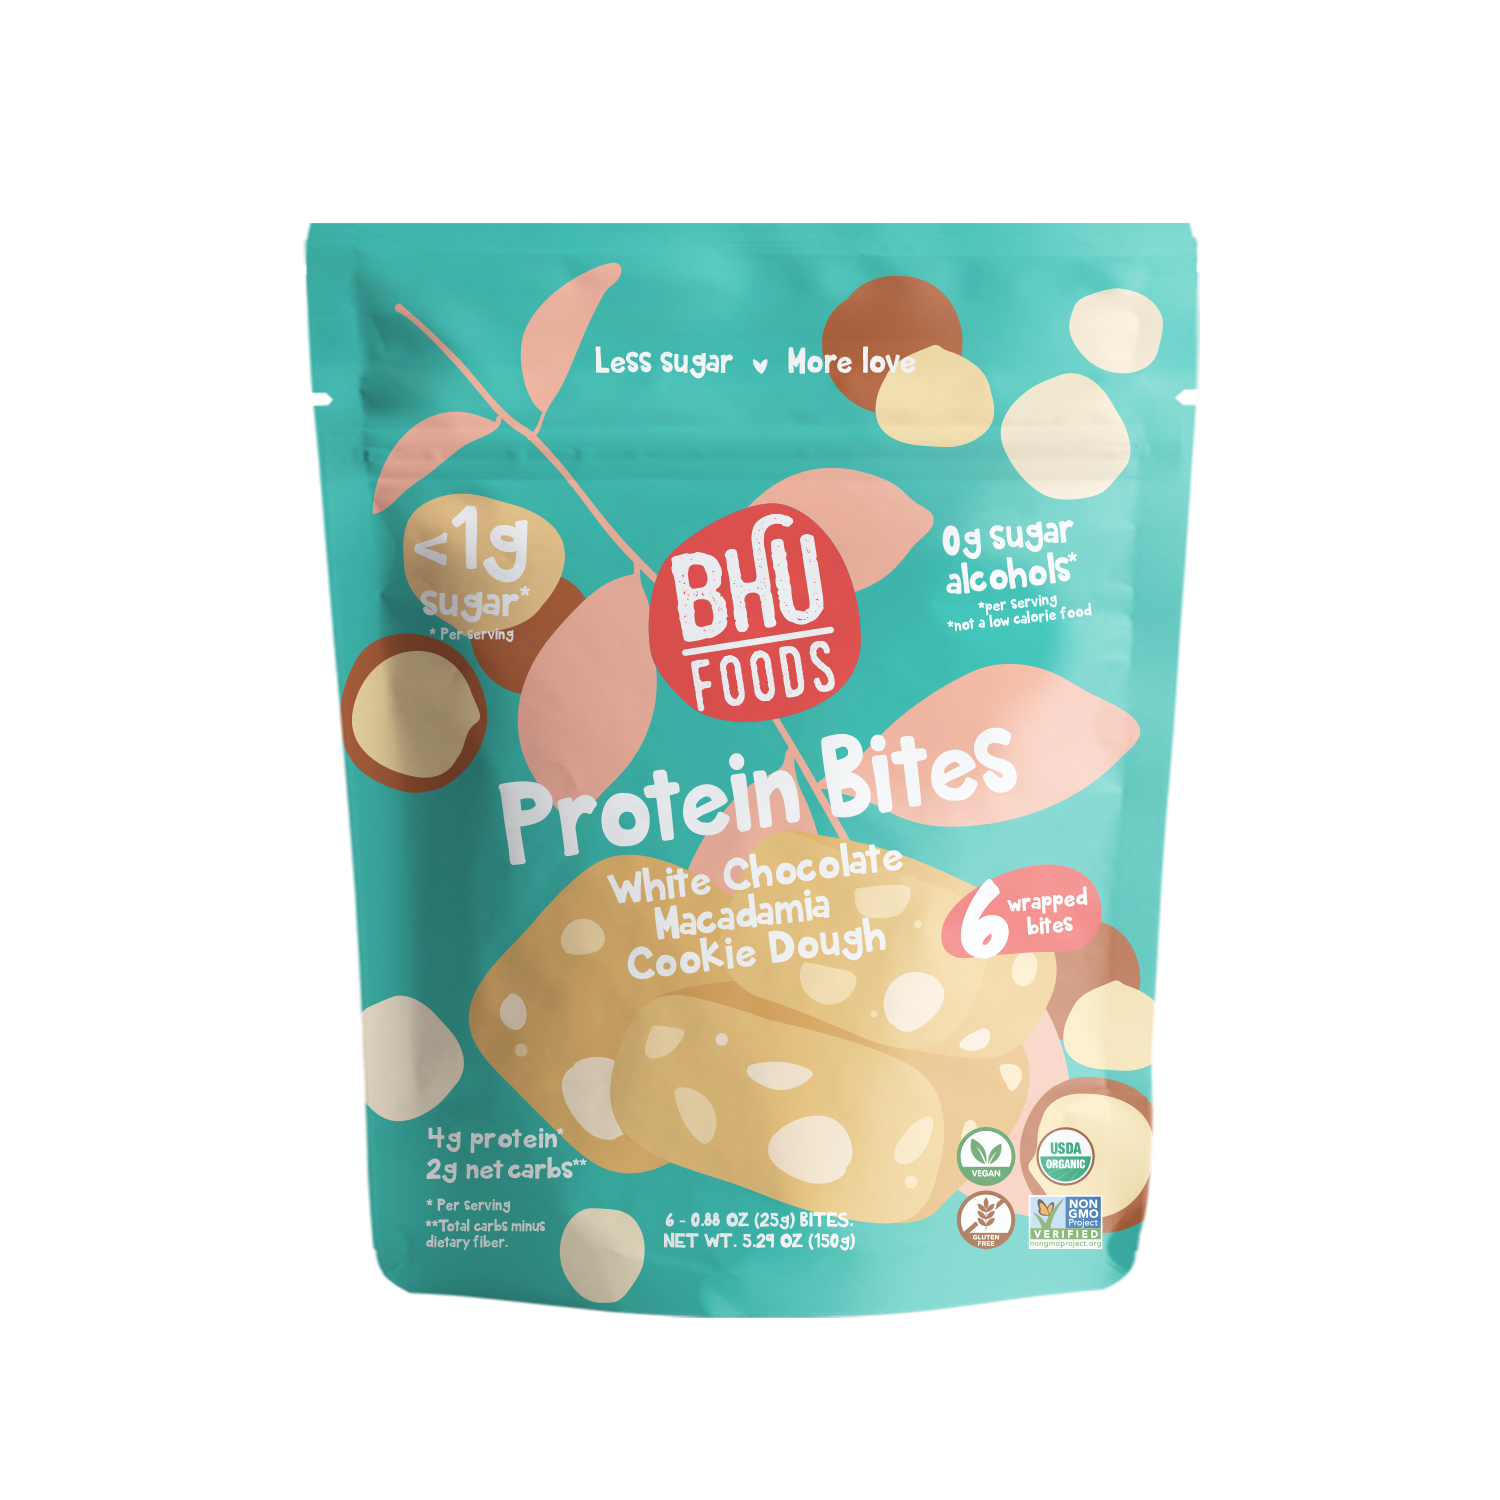 BHU Foods Protein Bites - White Chocolate Macadamia Cookie Dough 6 innerpacks per case 5.3 oz